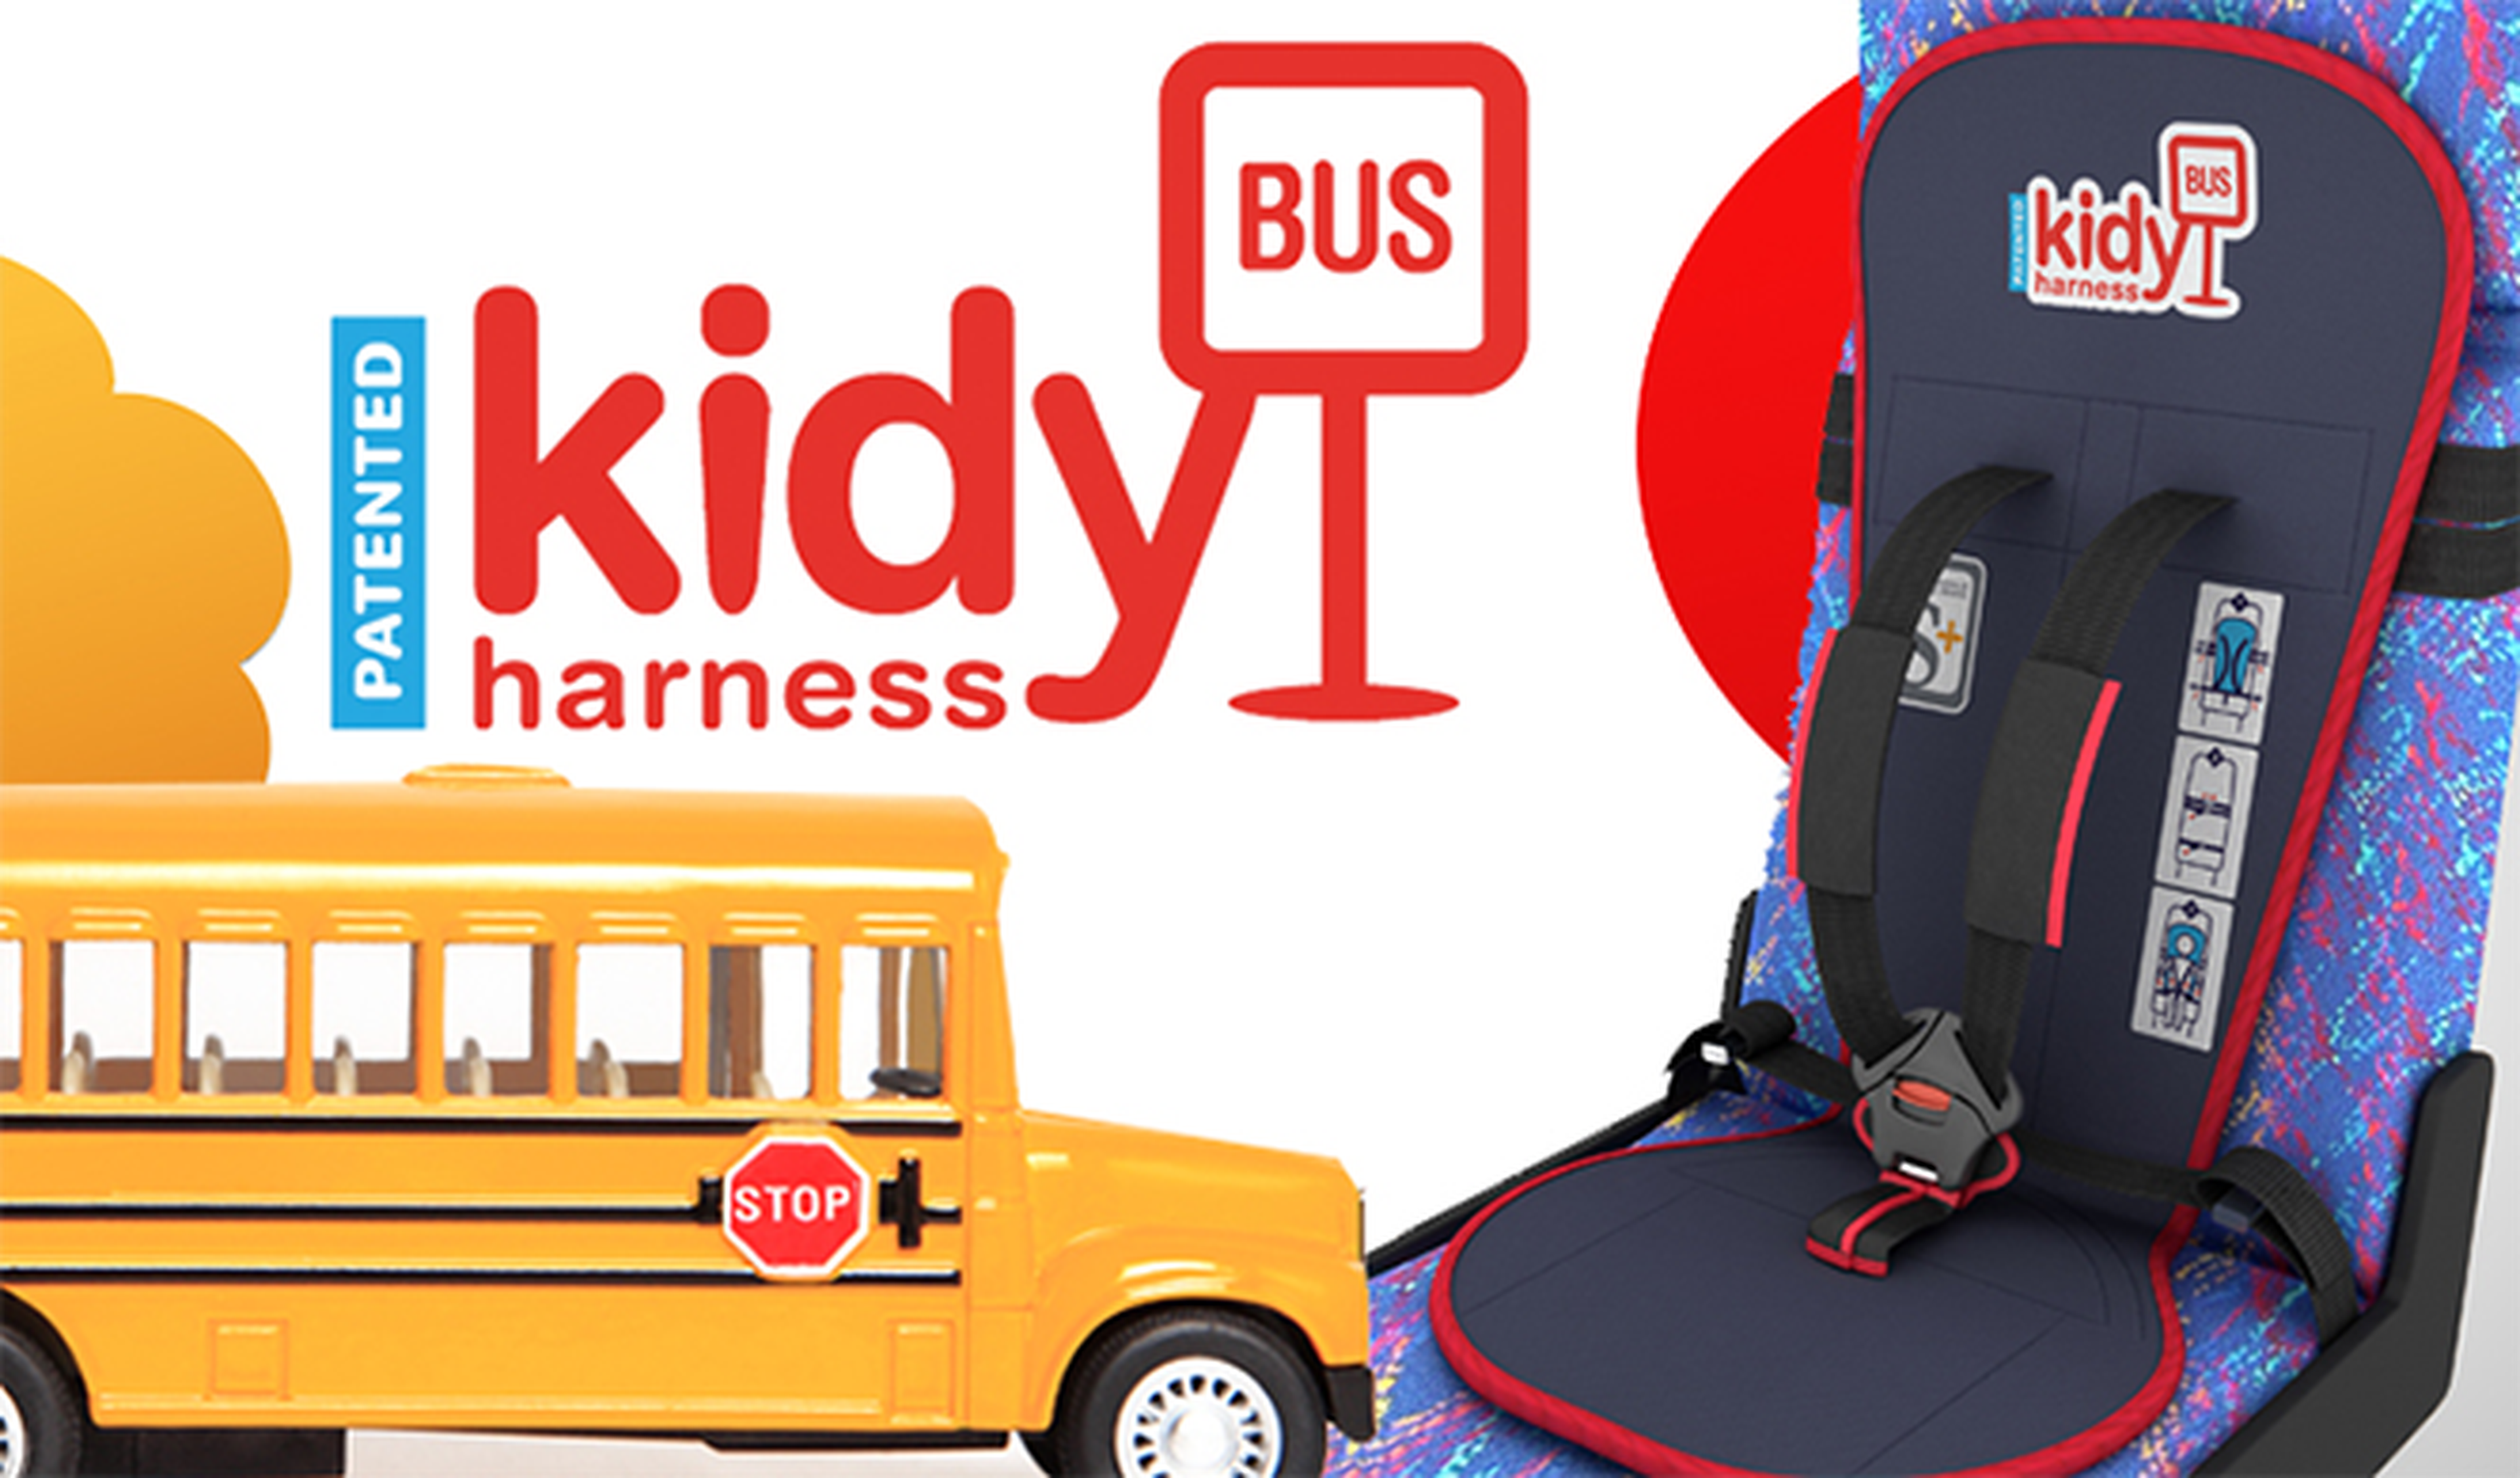 Kidy Bus Harness, una silla infantil para el autobús